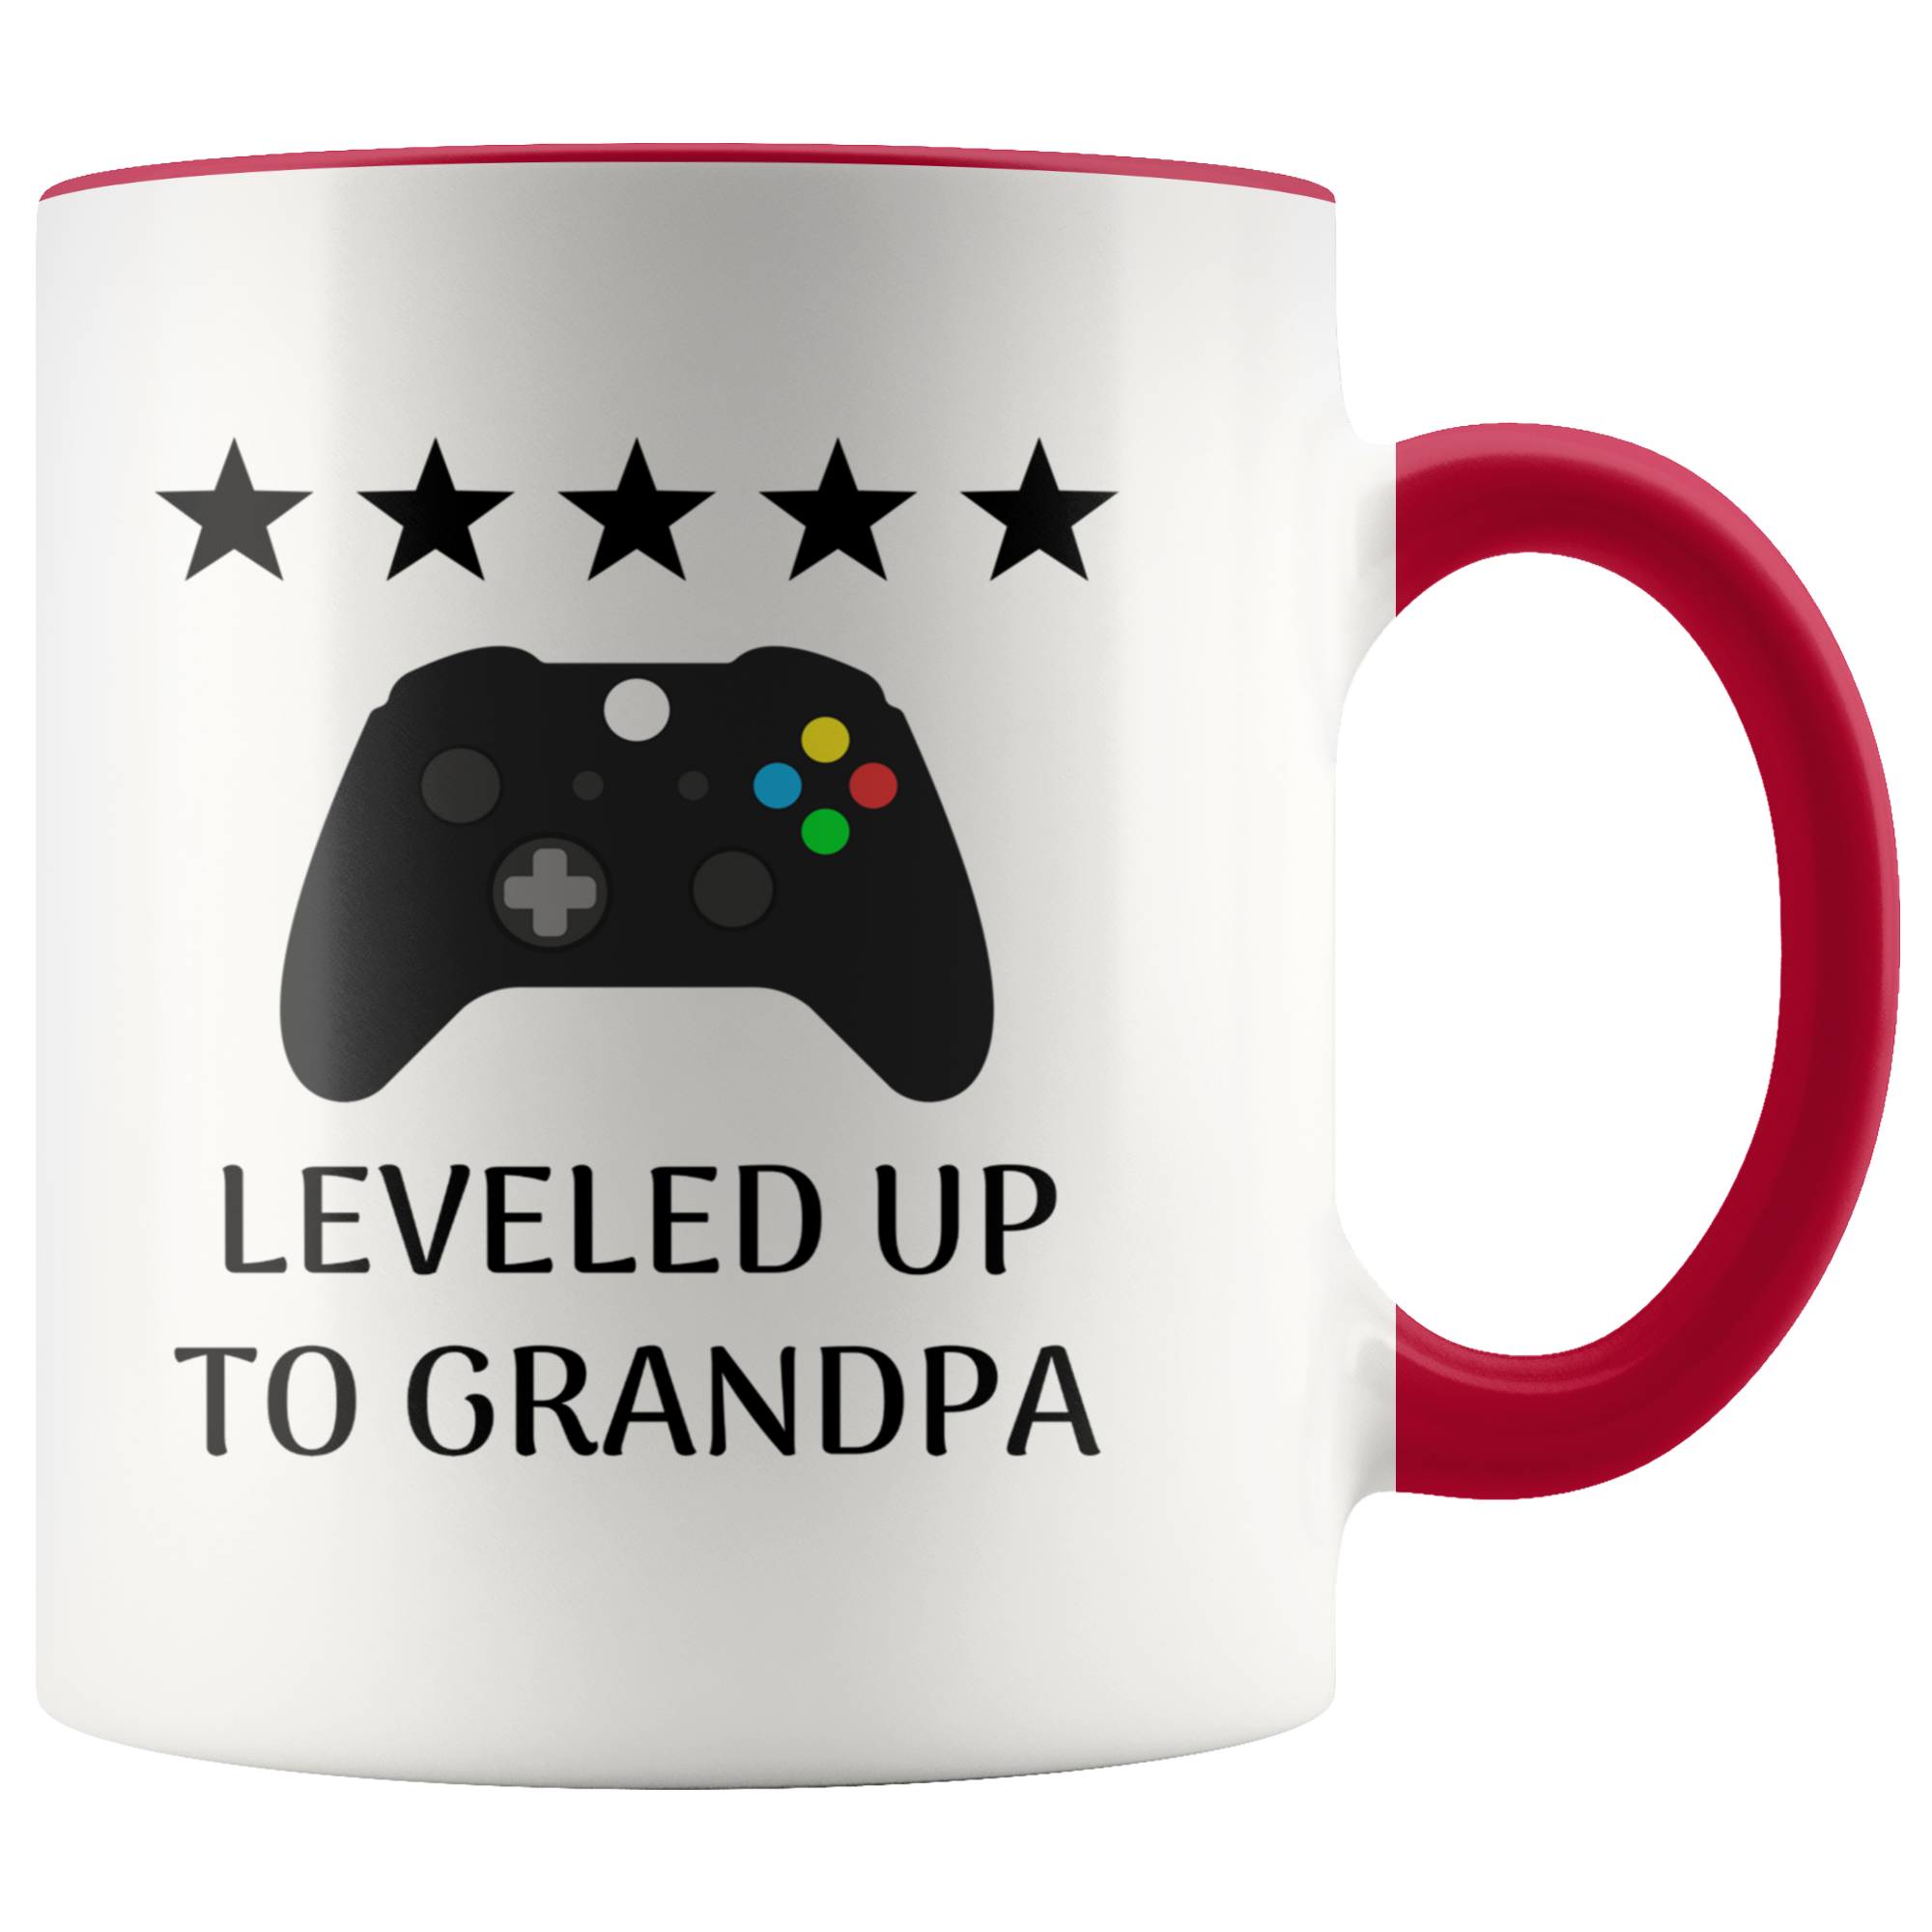 Leveled Up To Grandpa Mug